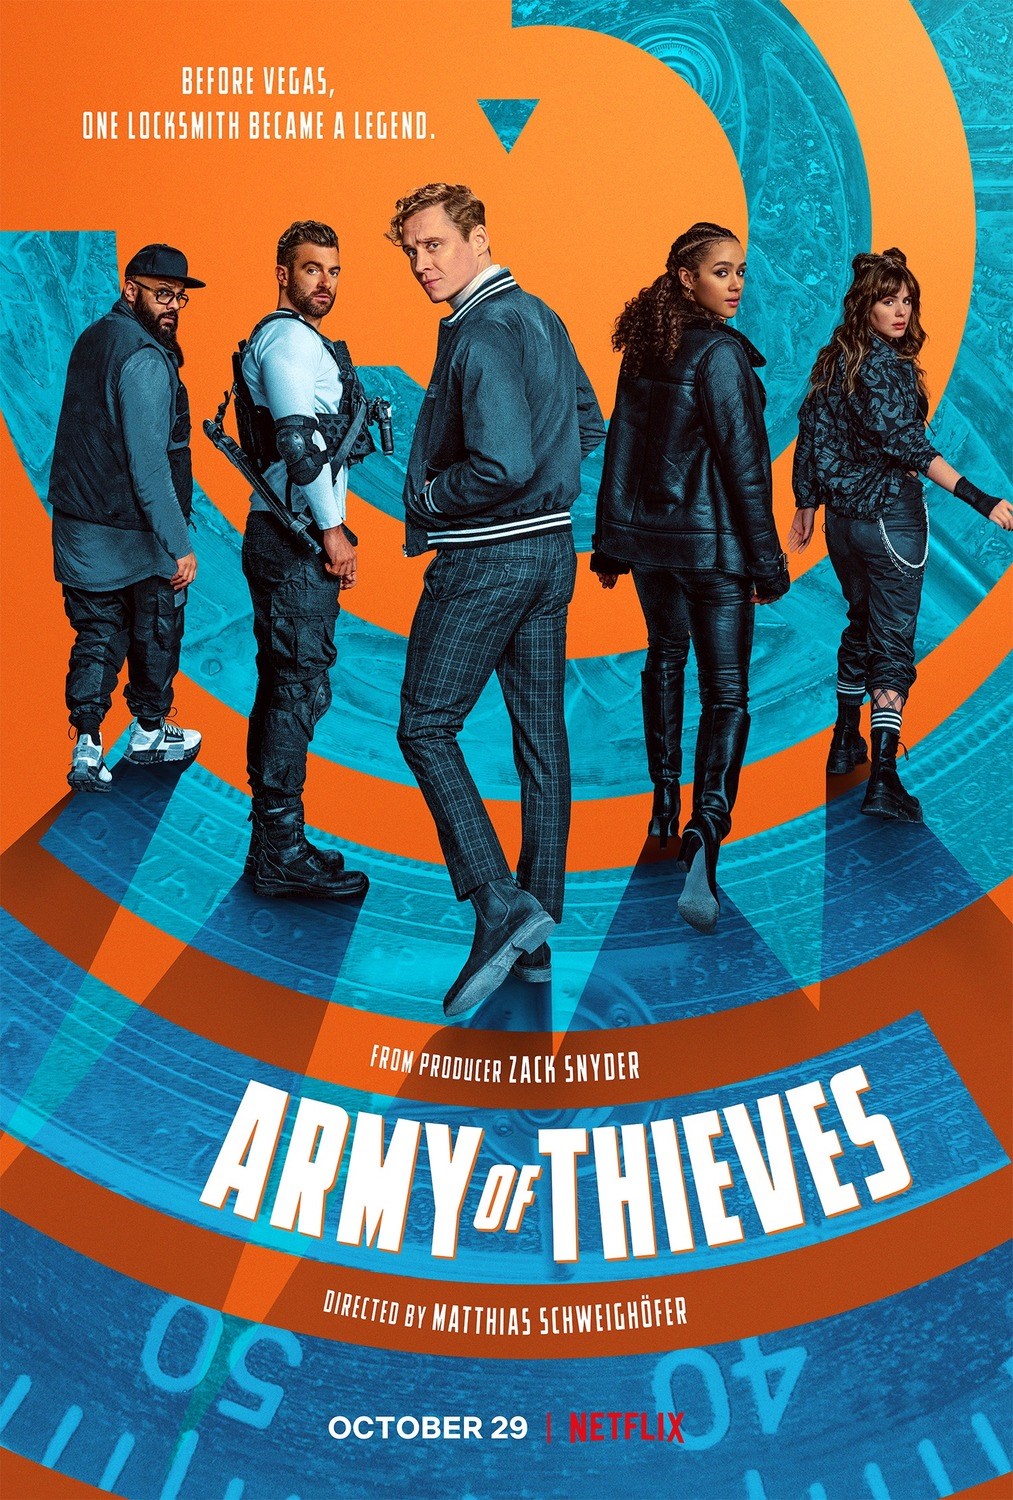 netflix en iyi soygun filmi Army of Thieves